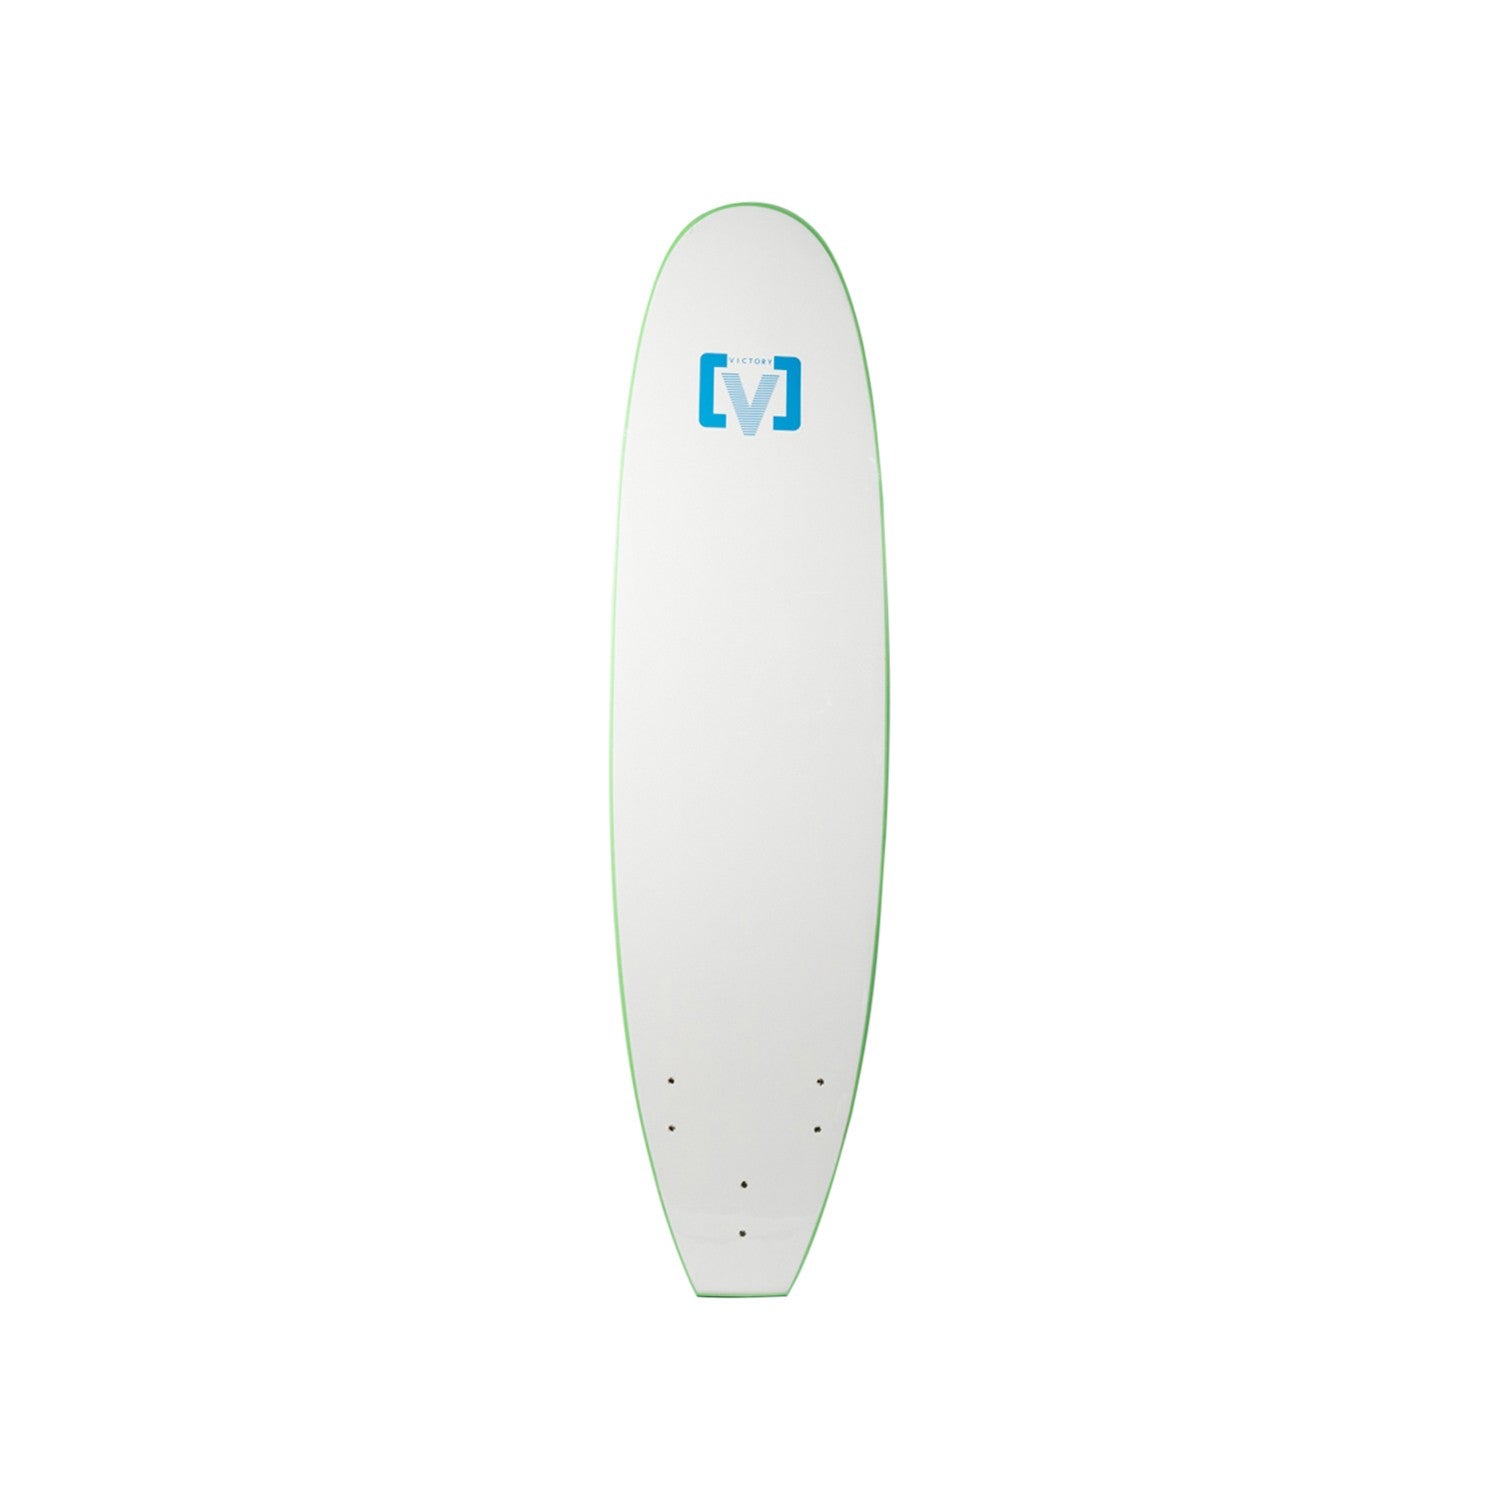 VICTORY - EPS Softboard - Foam surfboard - Evolutive 6'0 - Green